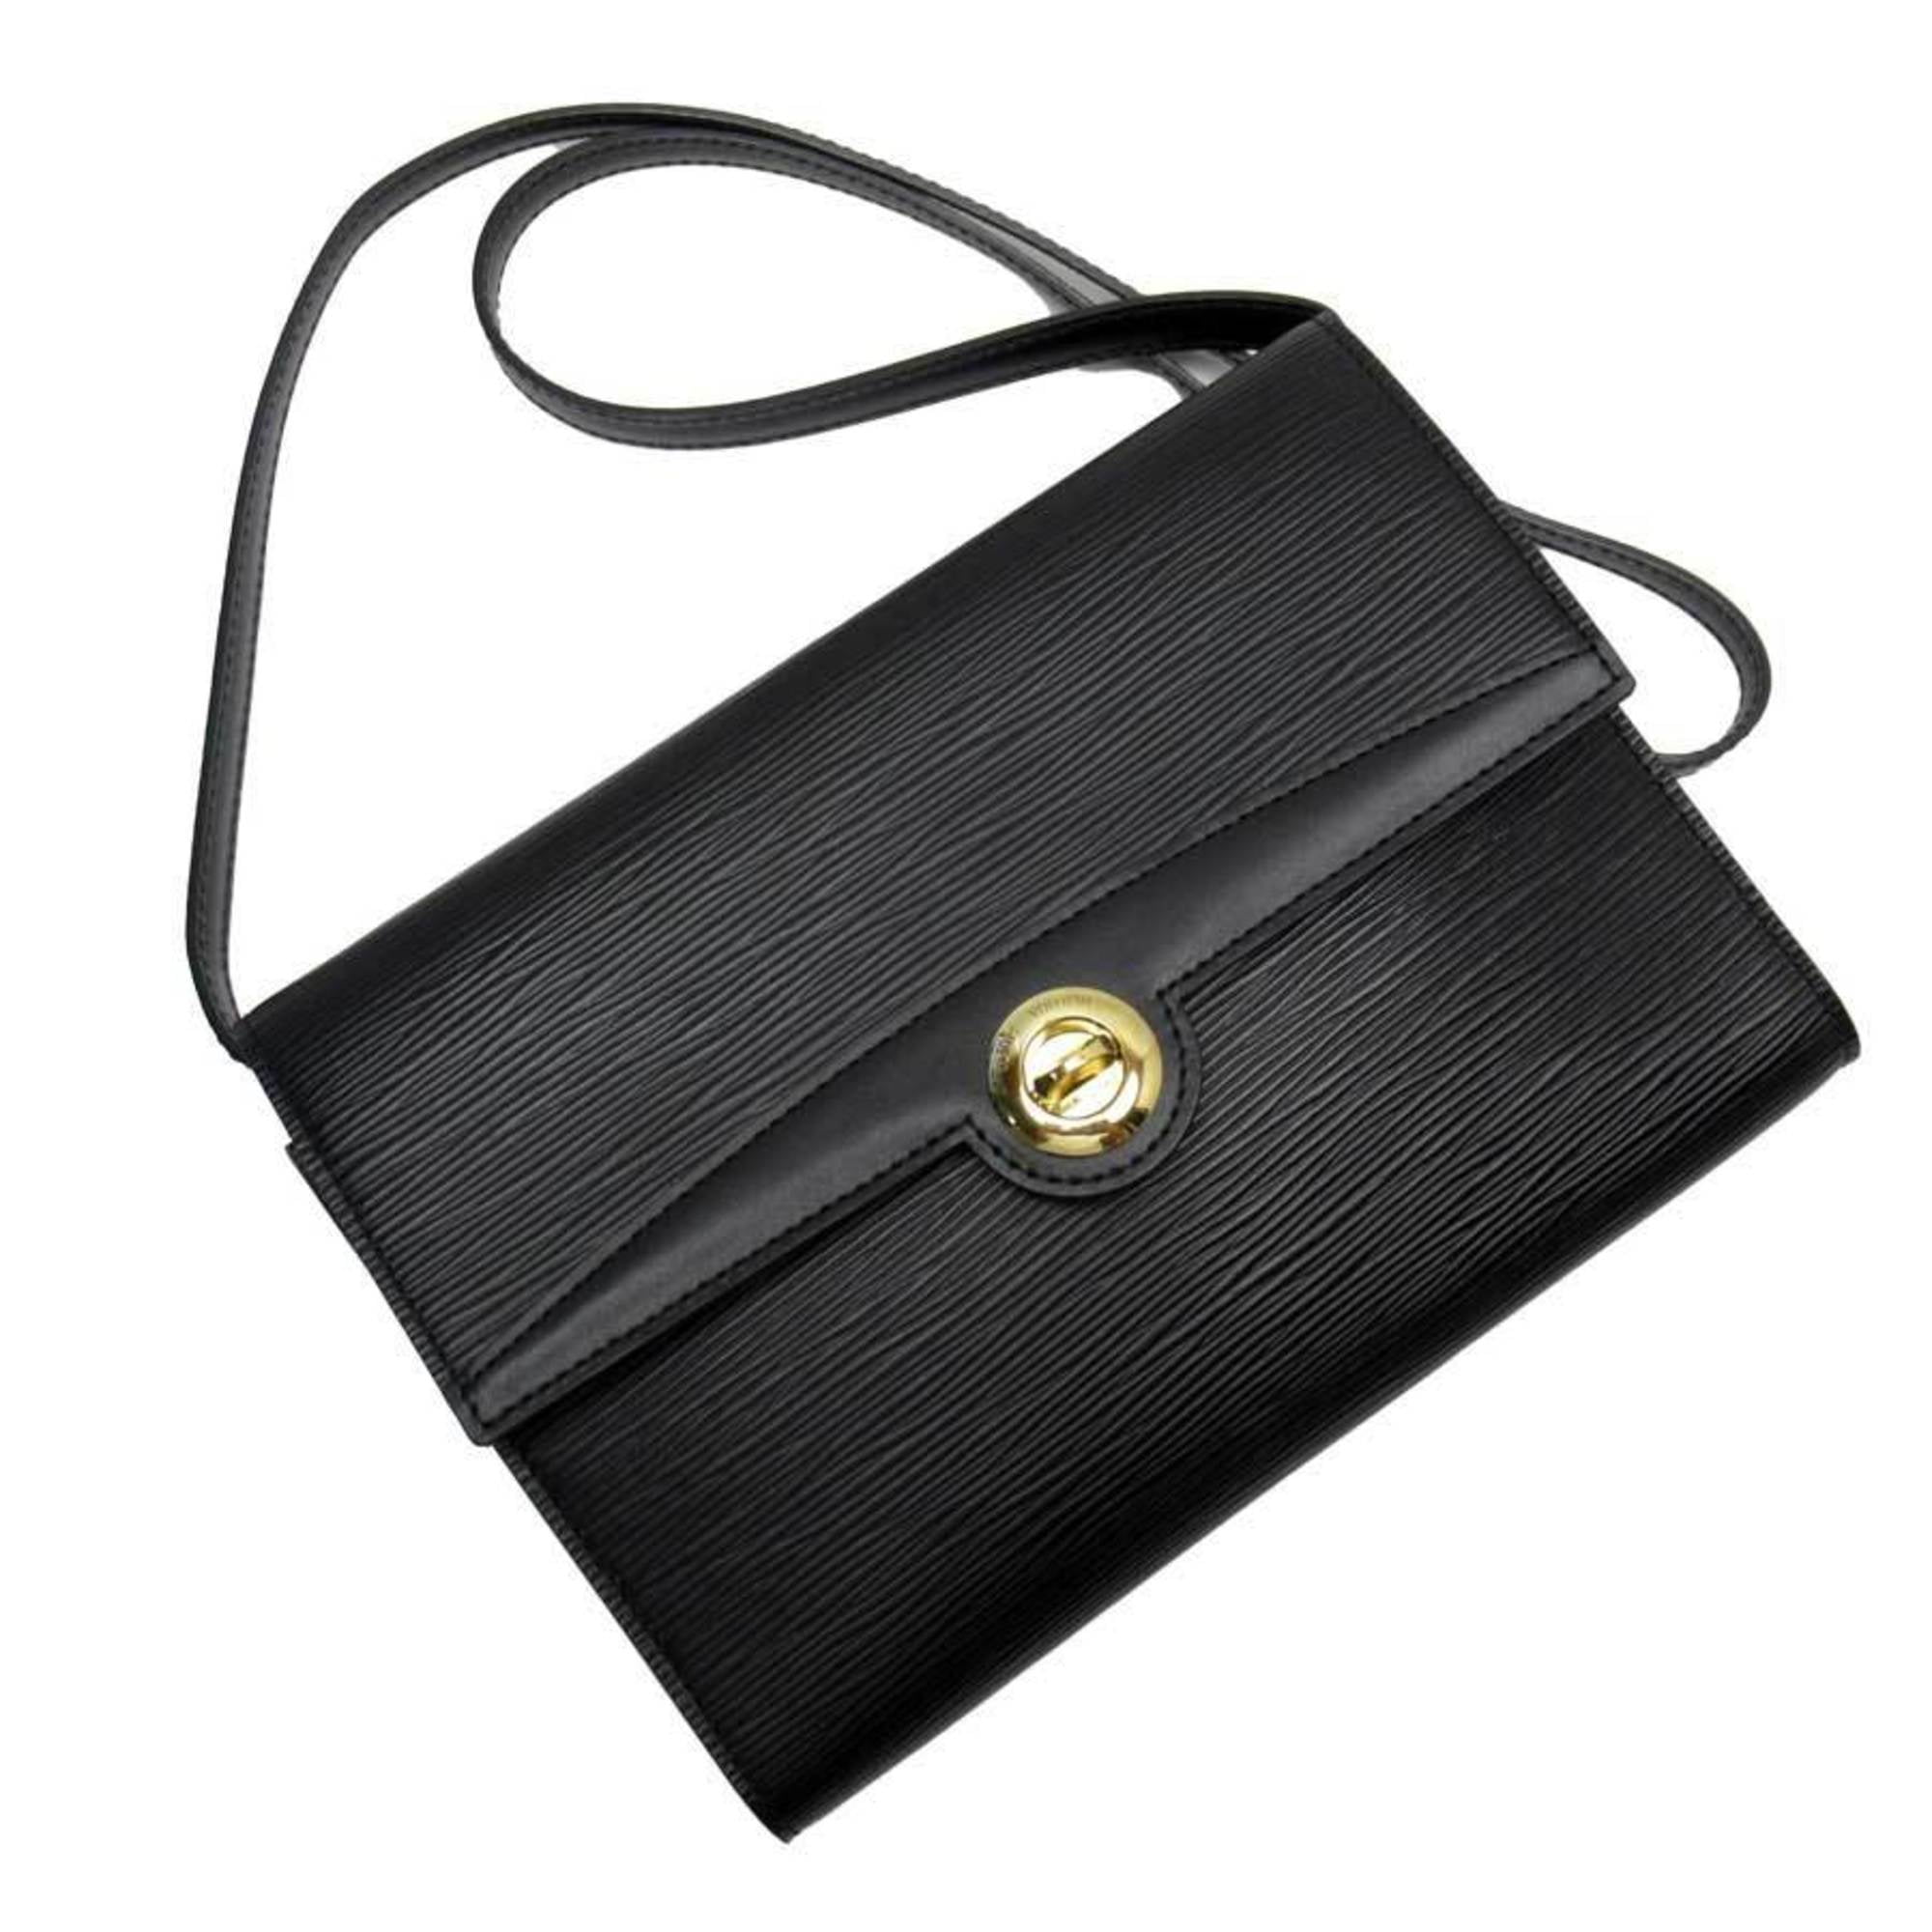 Louis Vuitton - Authenticated Purse - Leather Black for Women, Good Condition